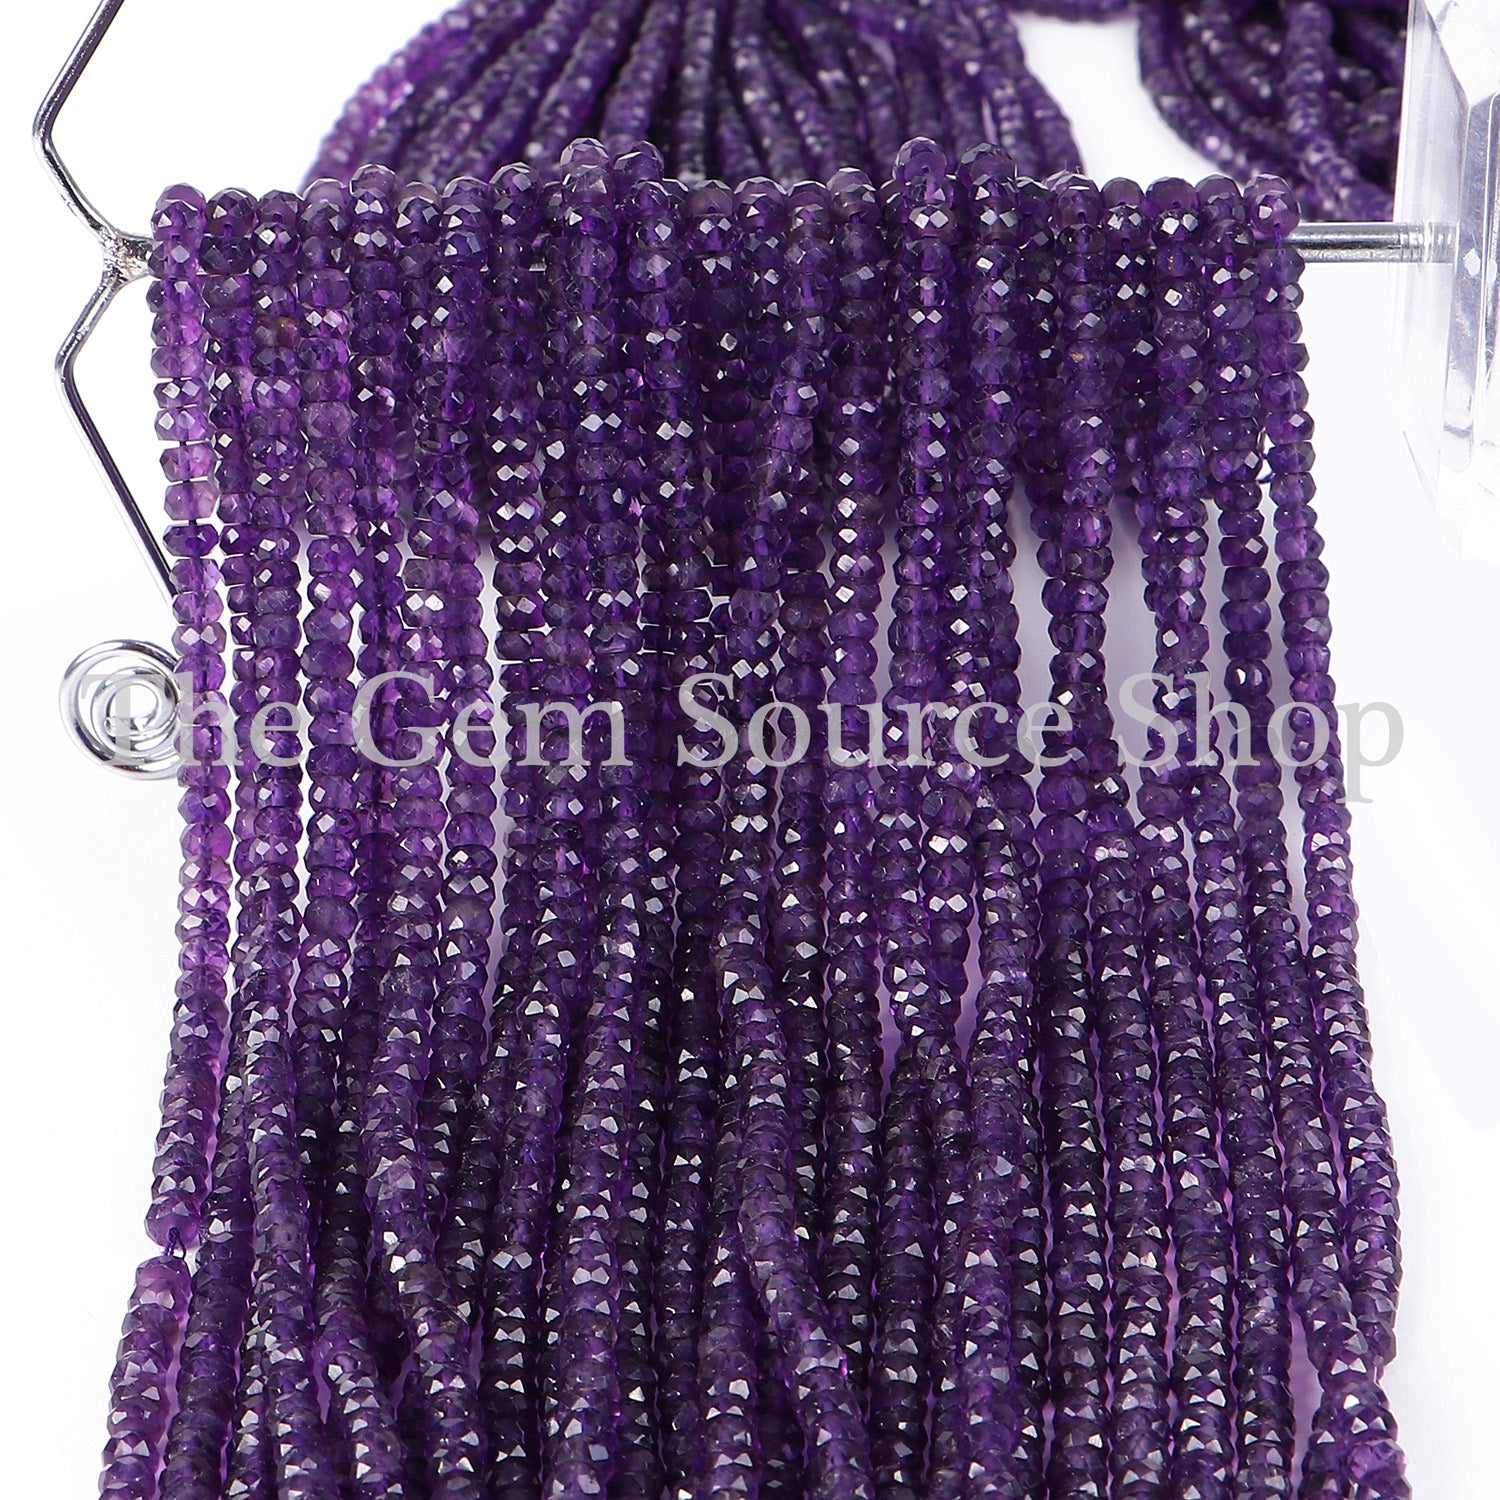 Amethyst Beads, Amethyst Faceted Beads, Amethyst Rondelle Shape Beads, Amethyst Gemstone Beads